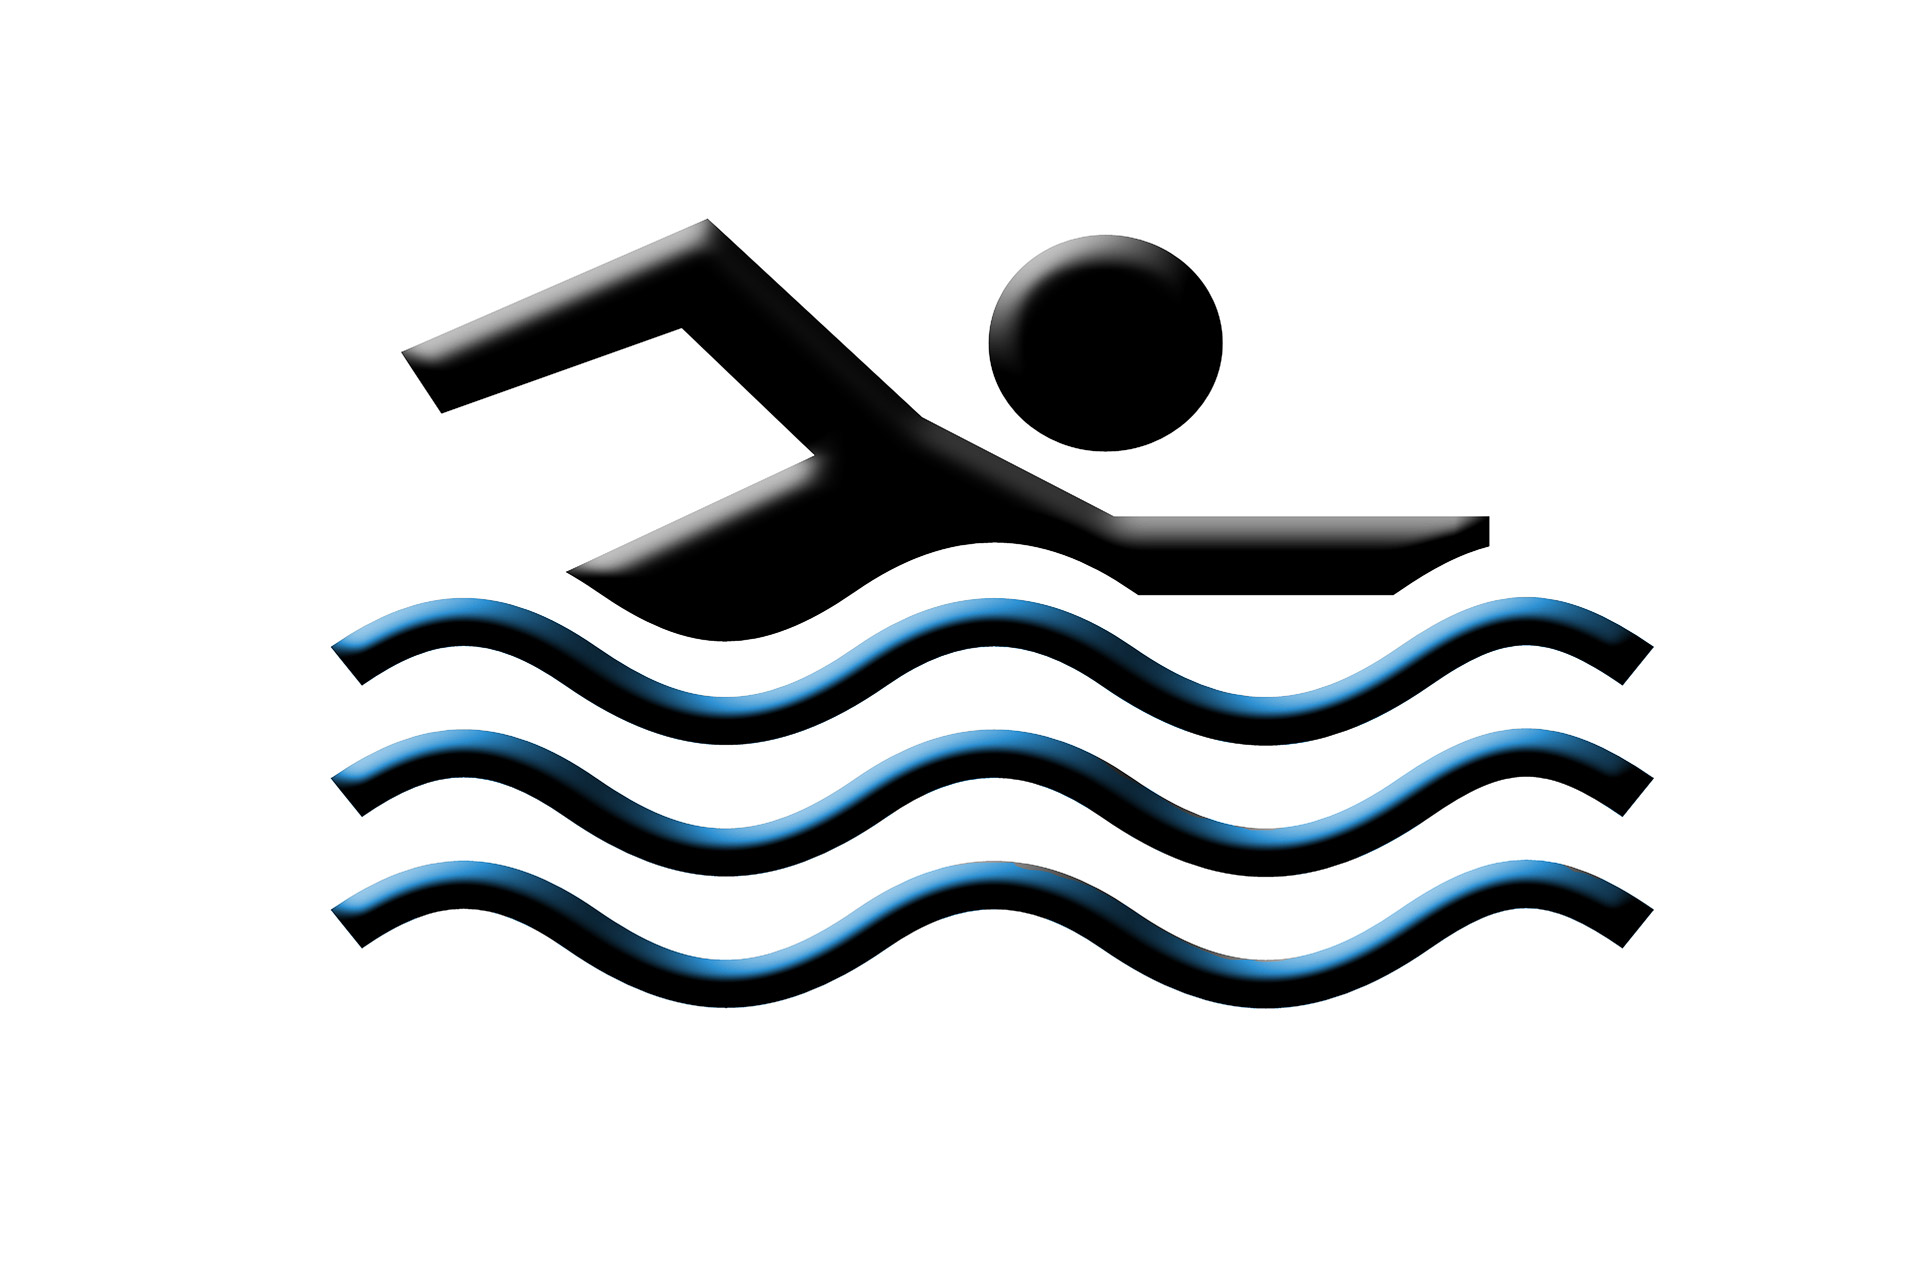 Nuoto - simbolo Immagine gratis - Public Domain Pictures